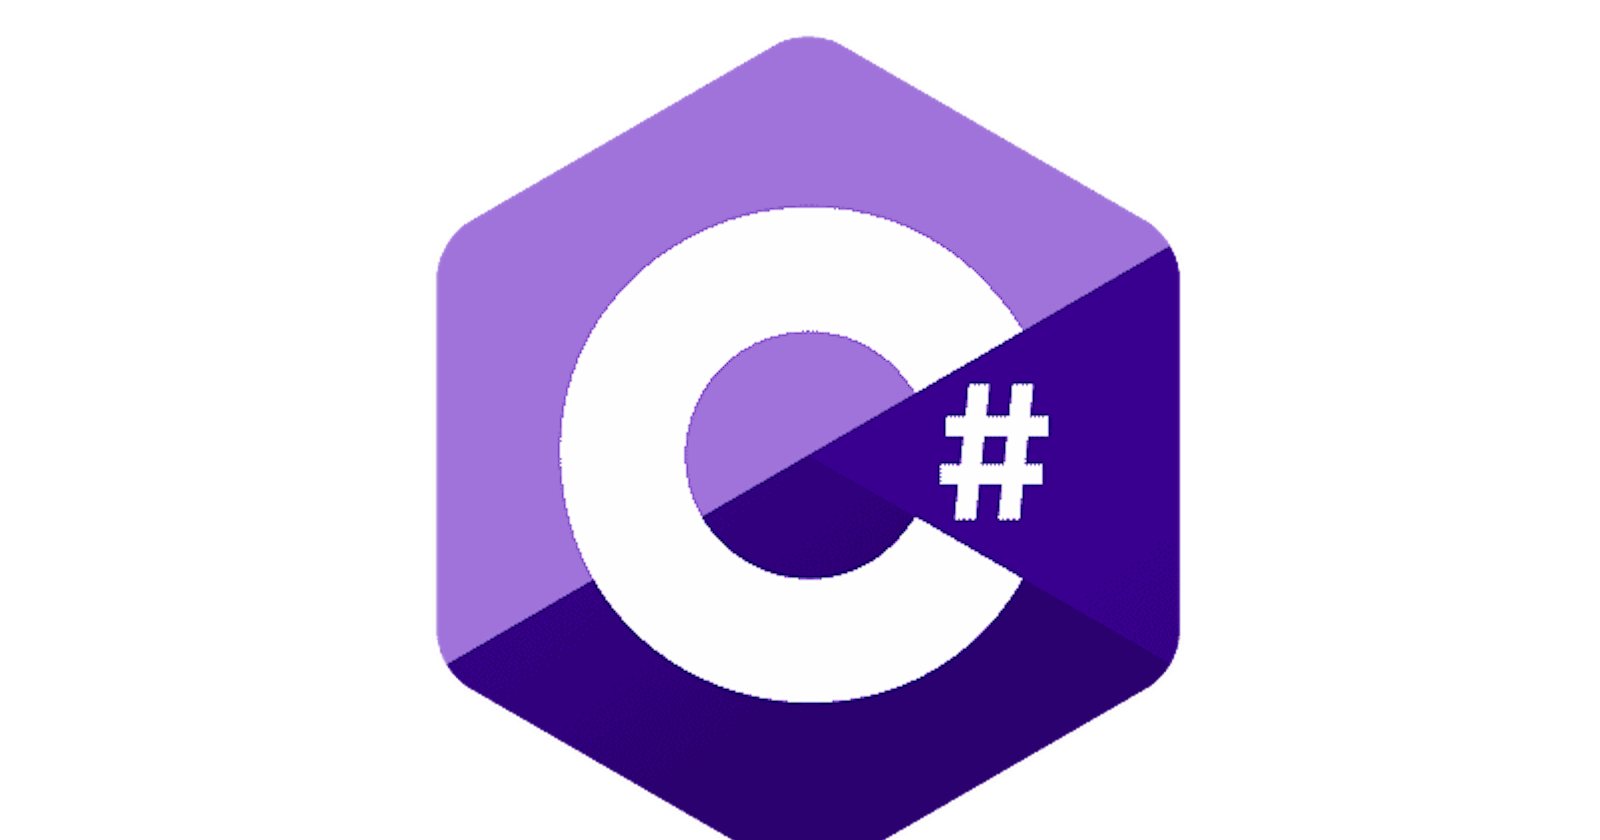 Using C# for Data Engineering (Intro)